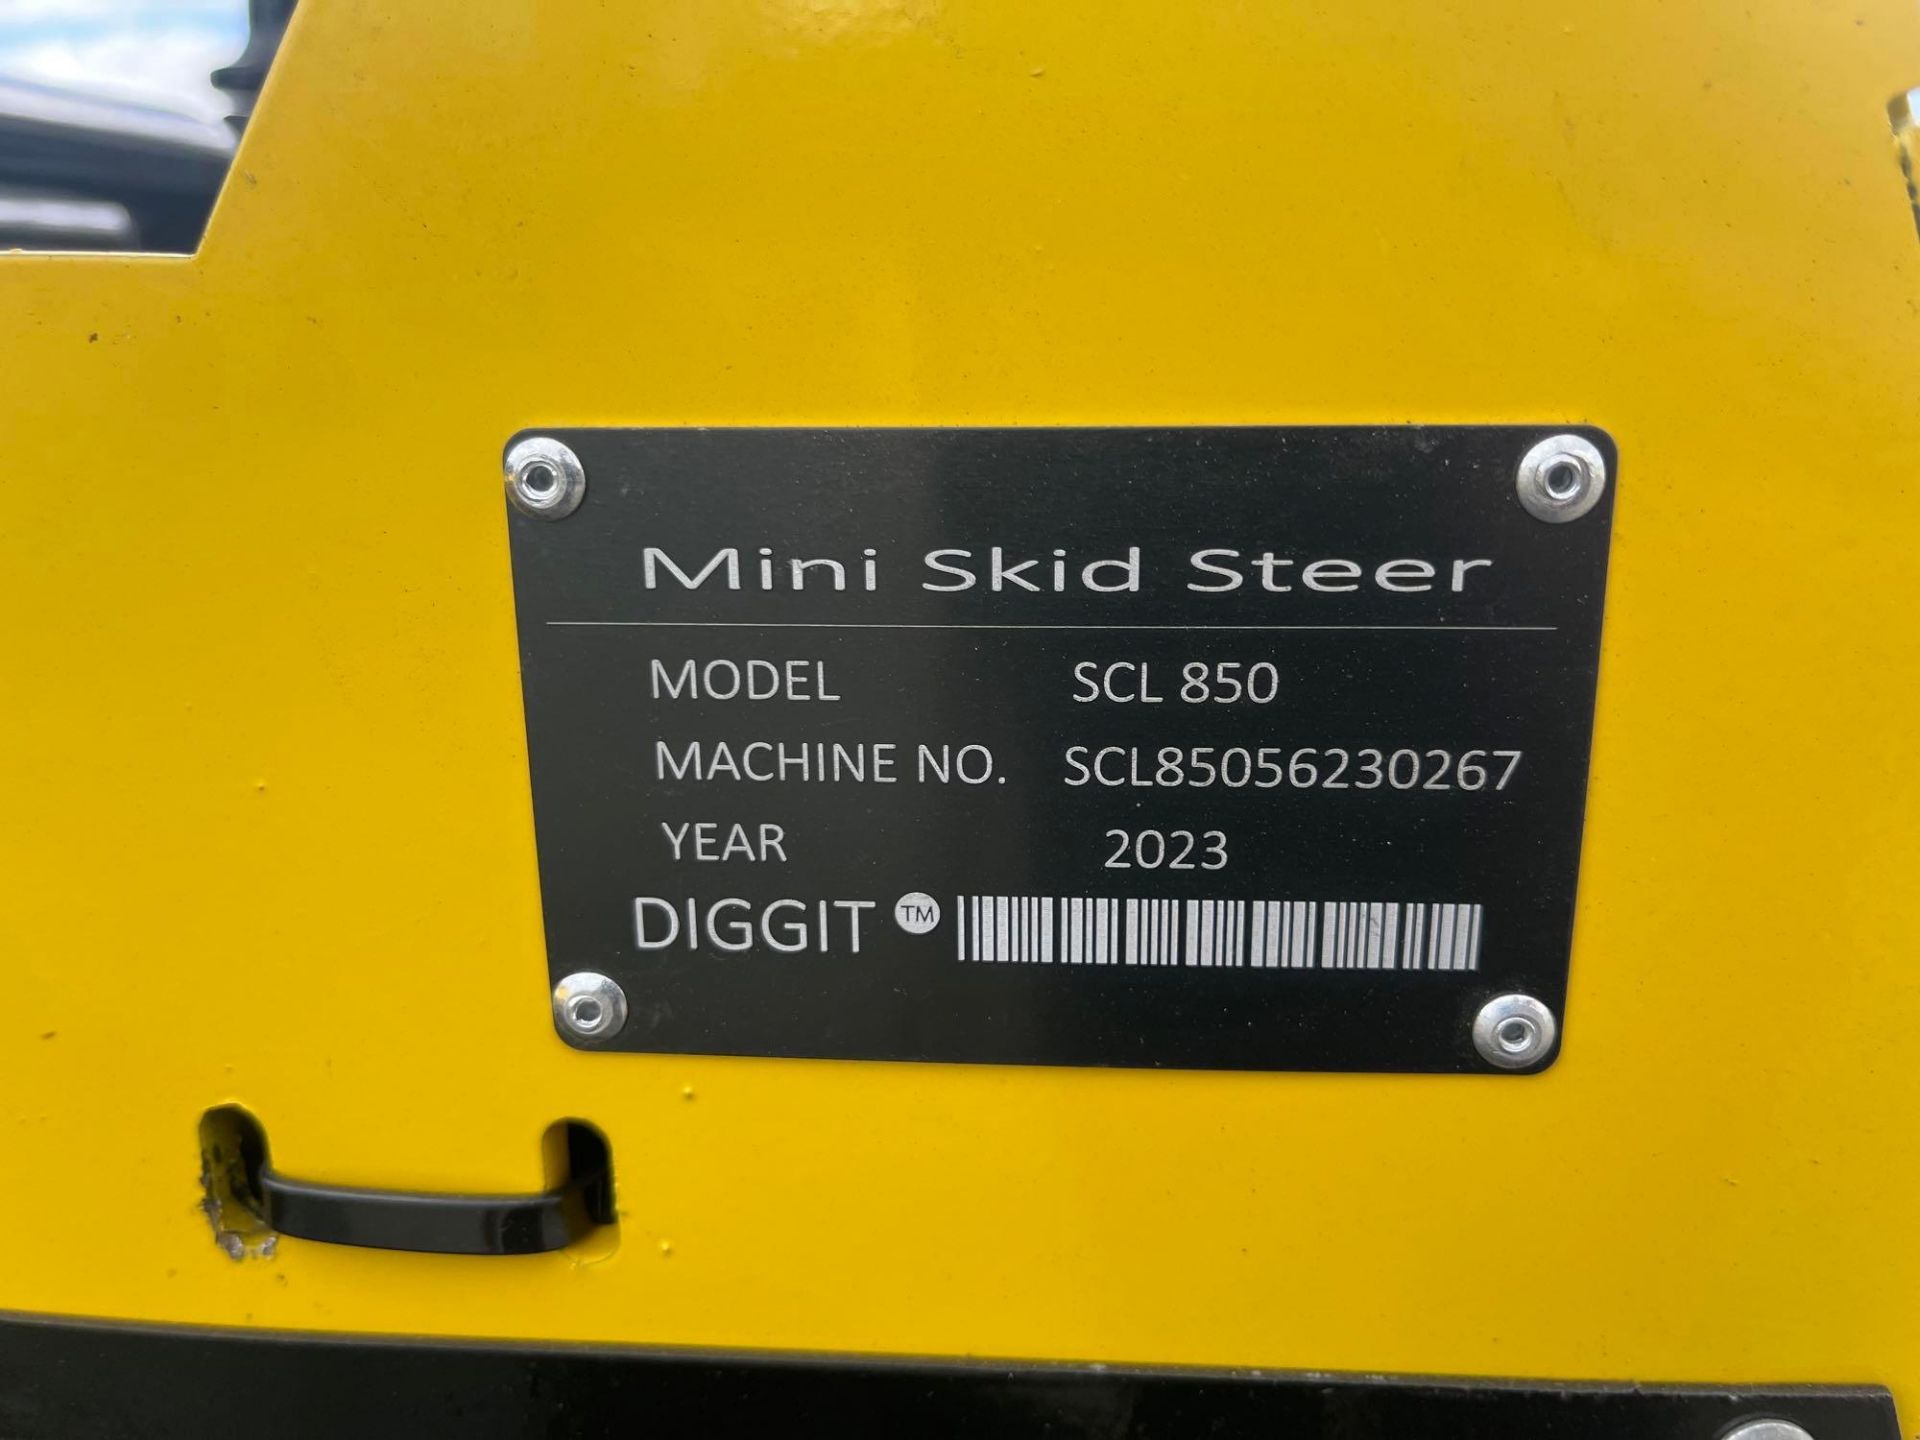 Diggit SCL850 Mini Skid Steer Loader - Image 5 of 15